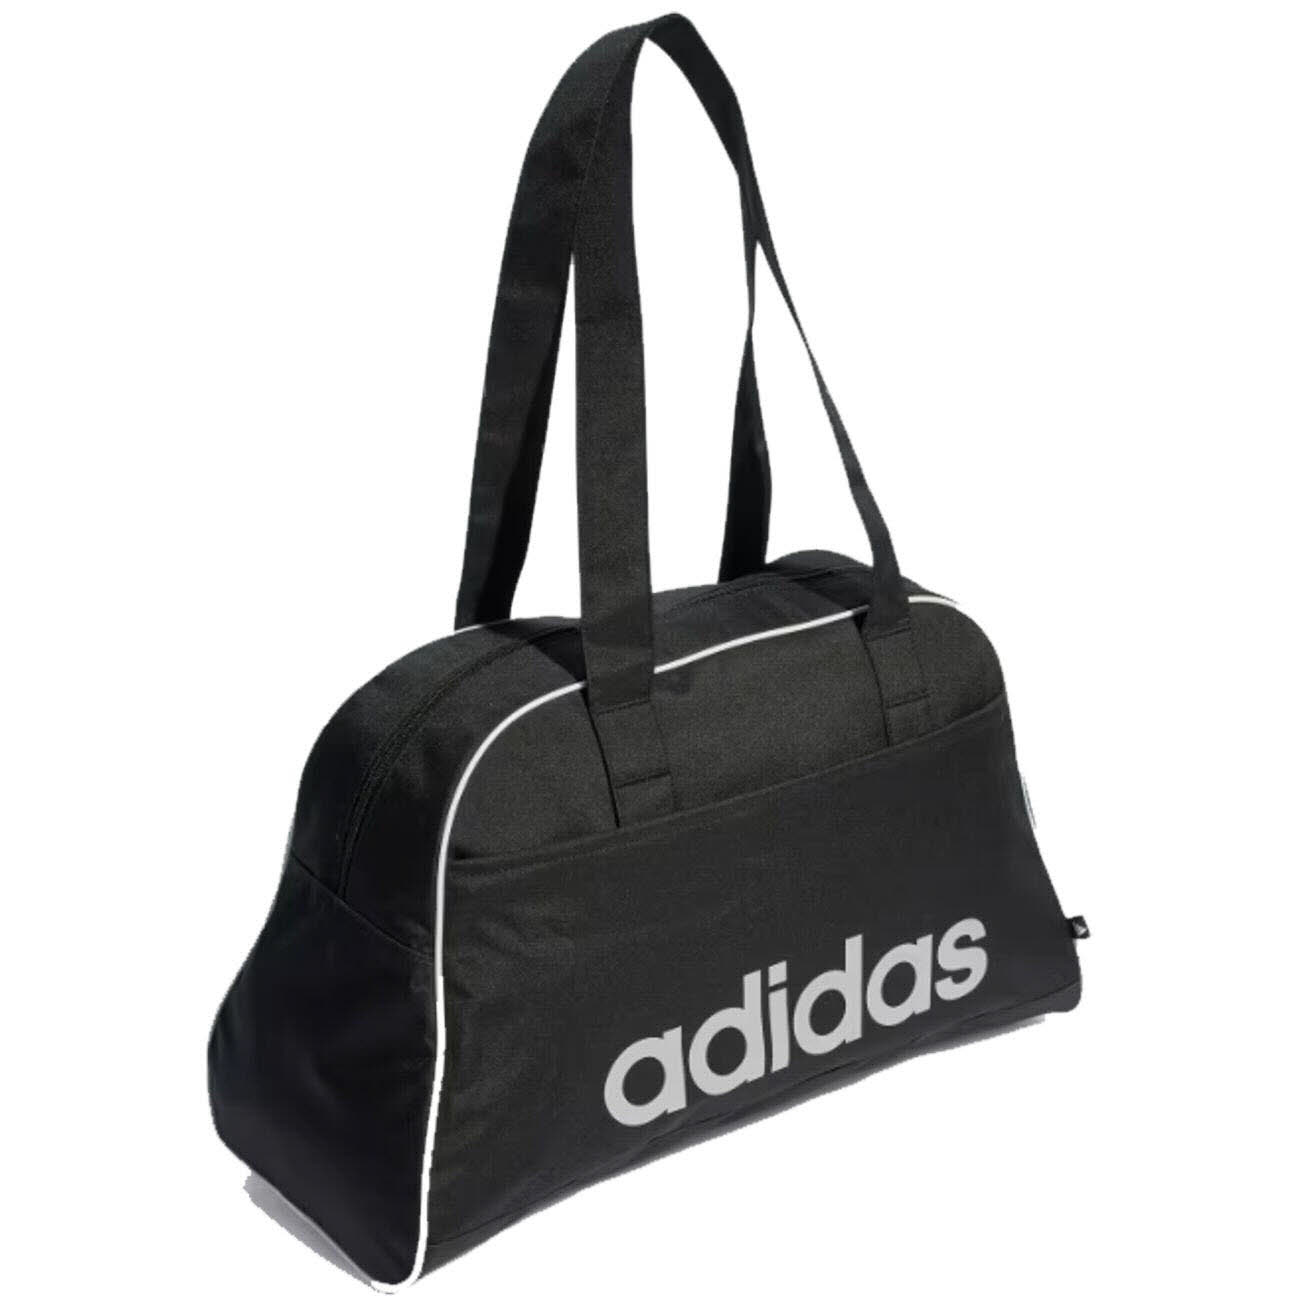 Adidas Sporttasche Linear Essentials Bowling Bag